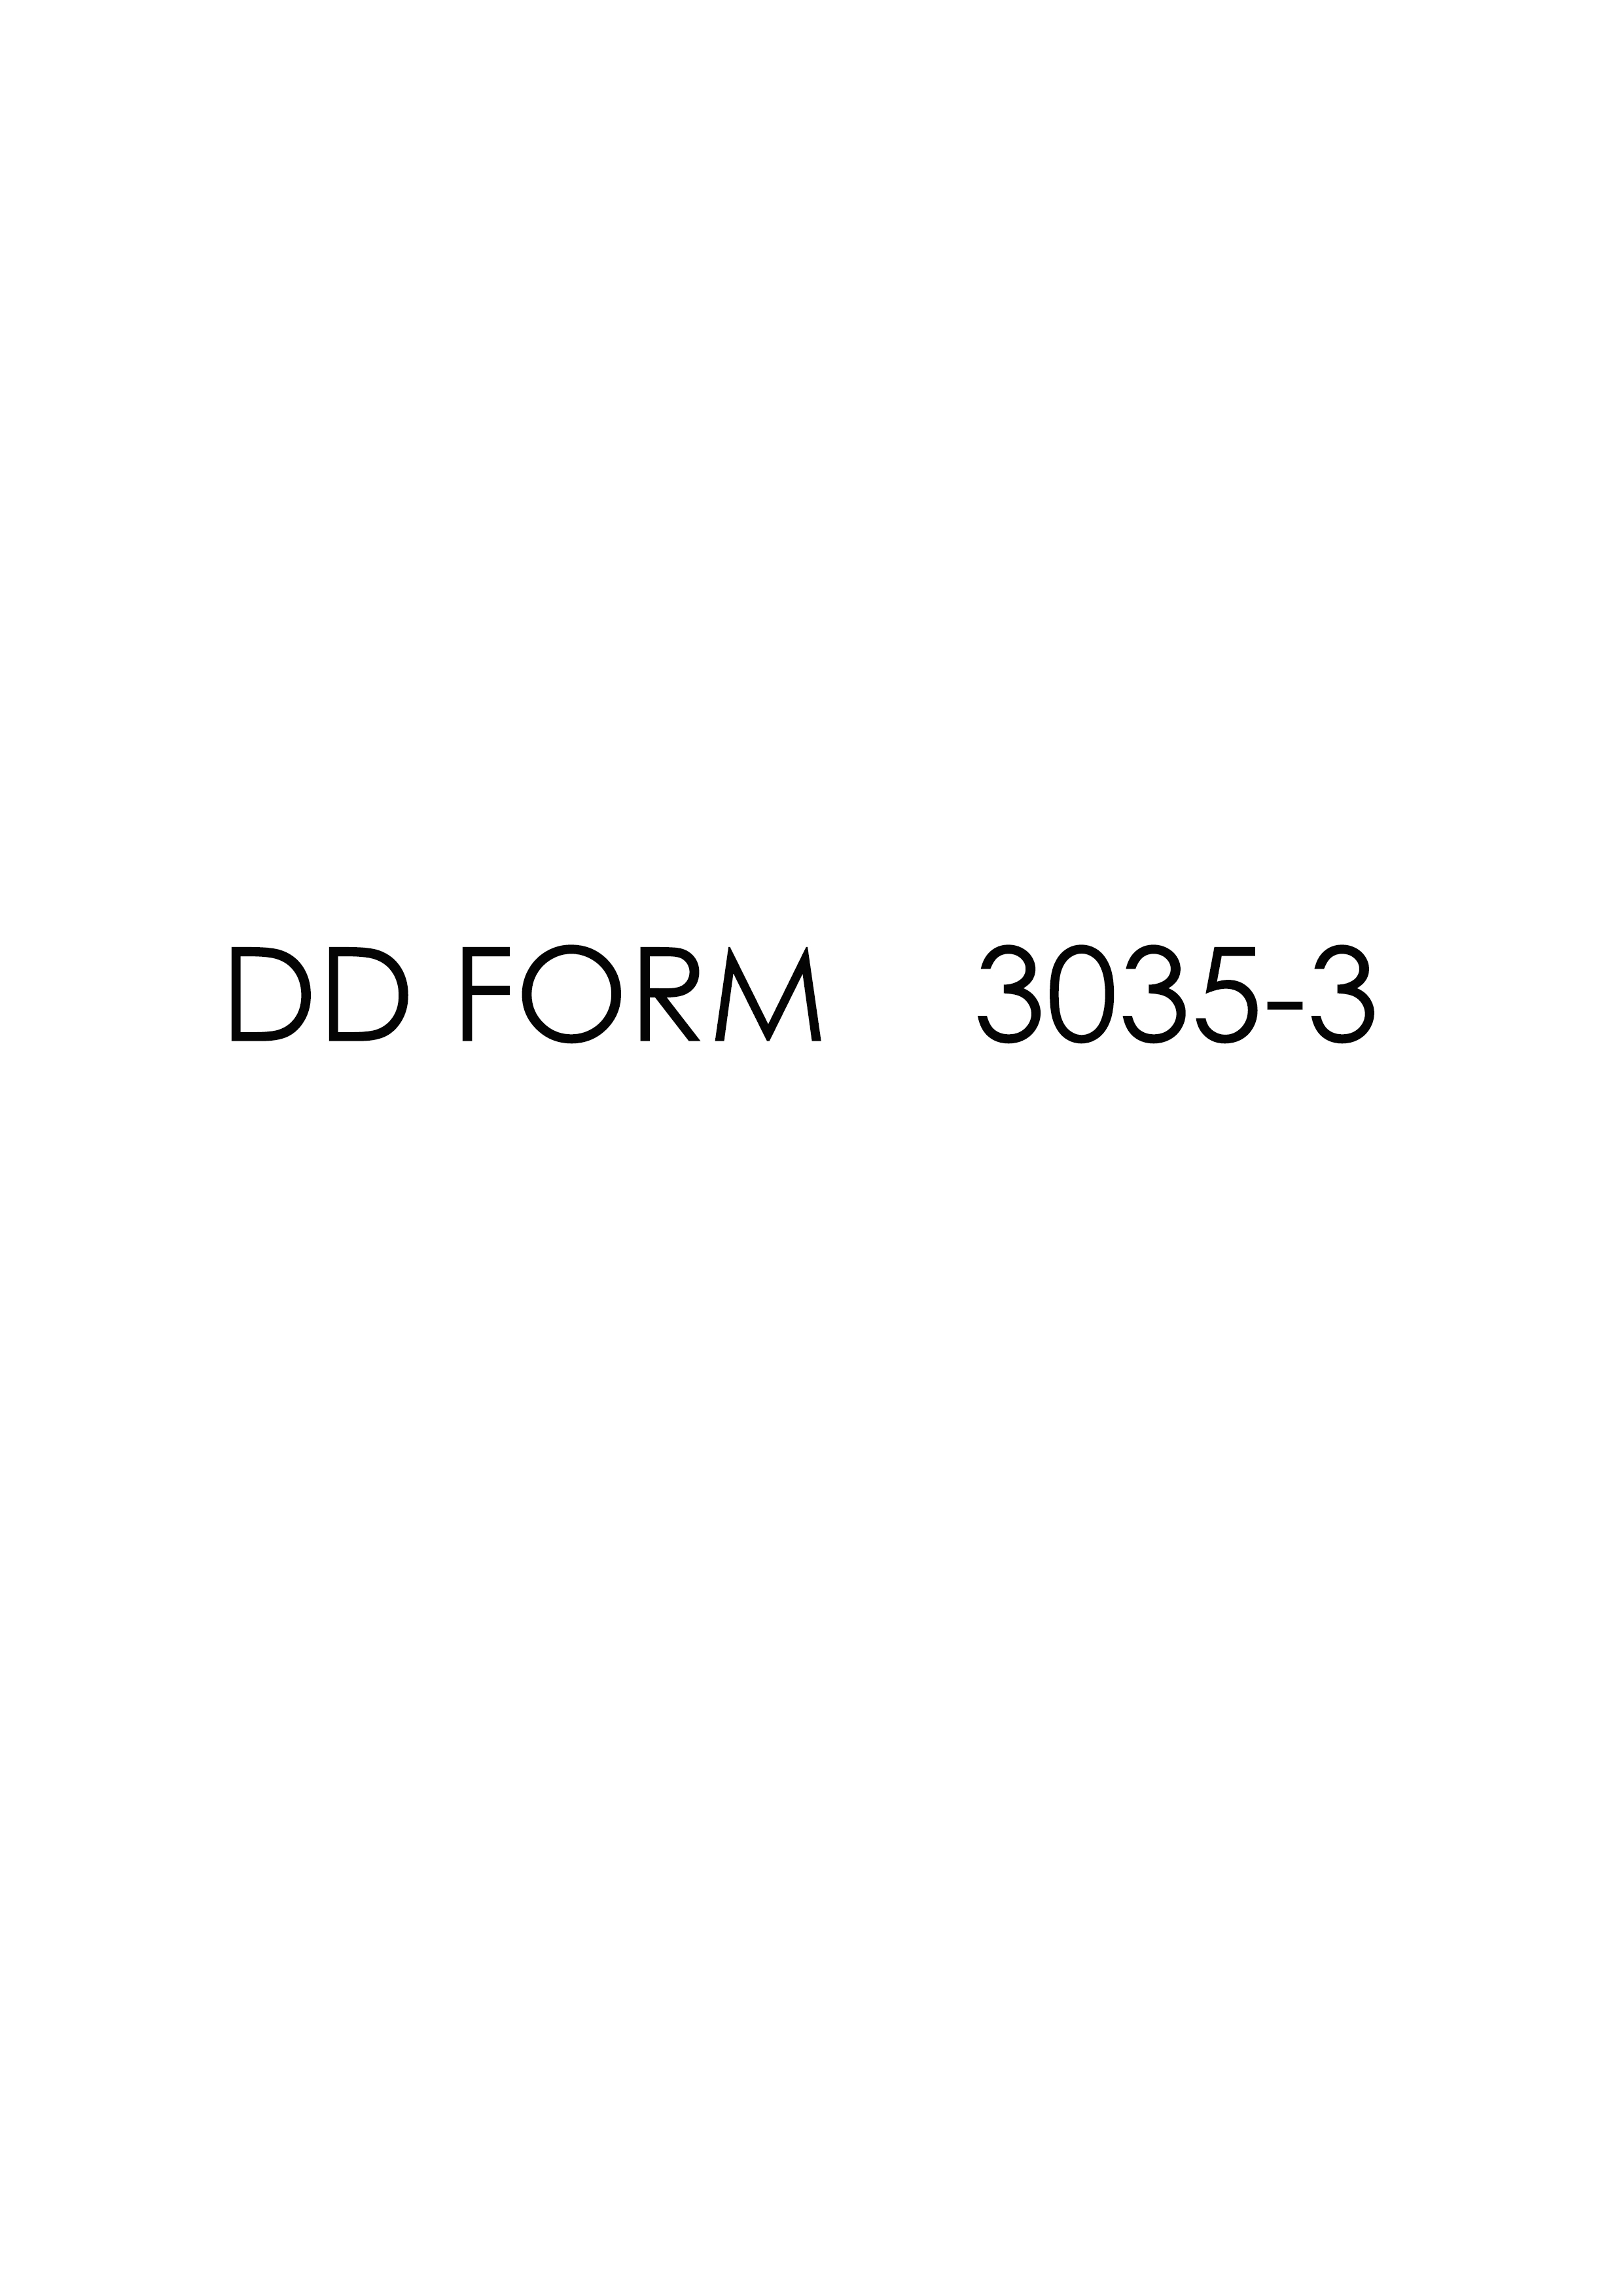 Download dd form 3035-3